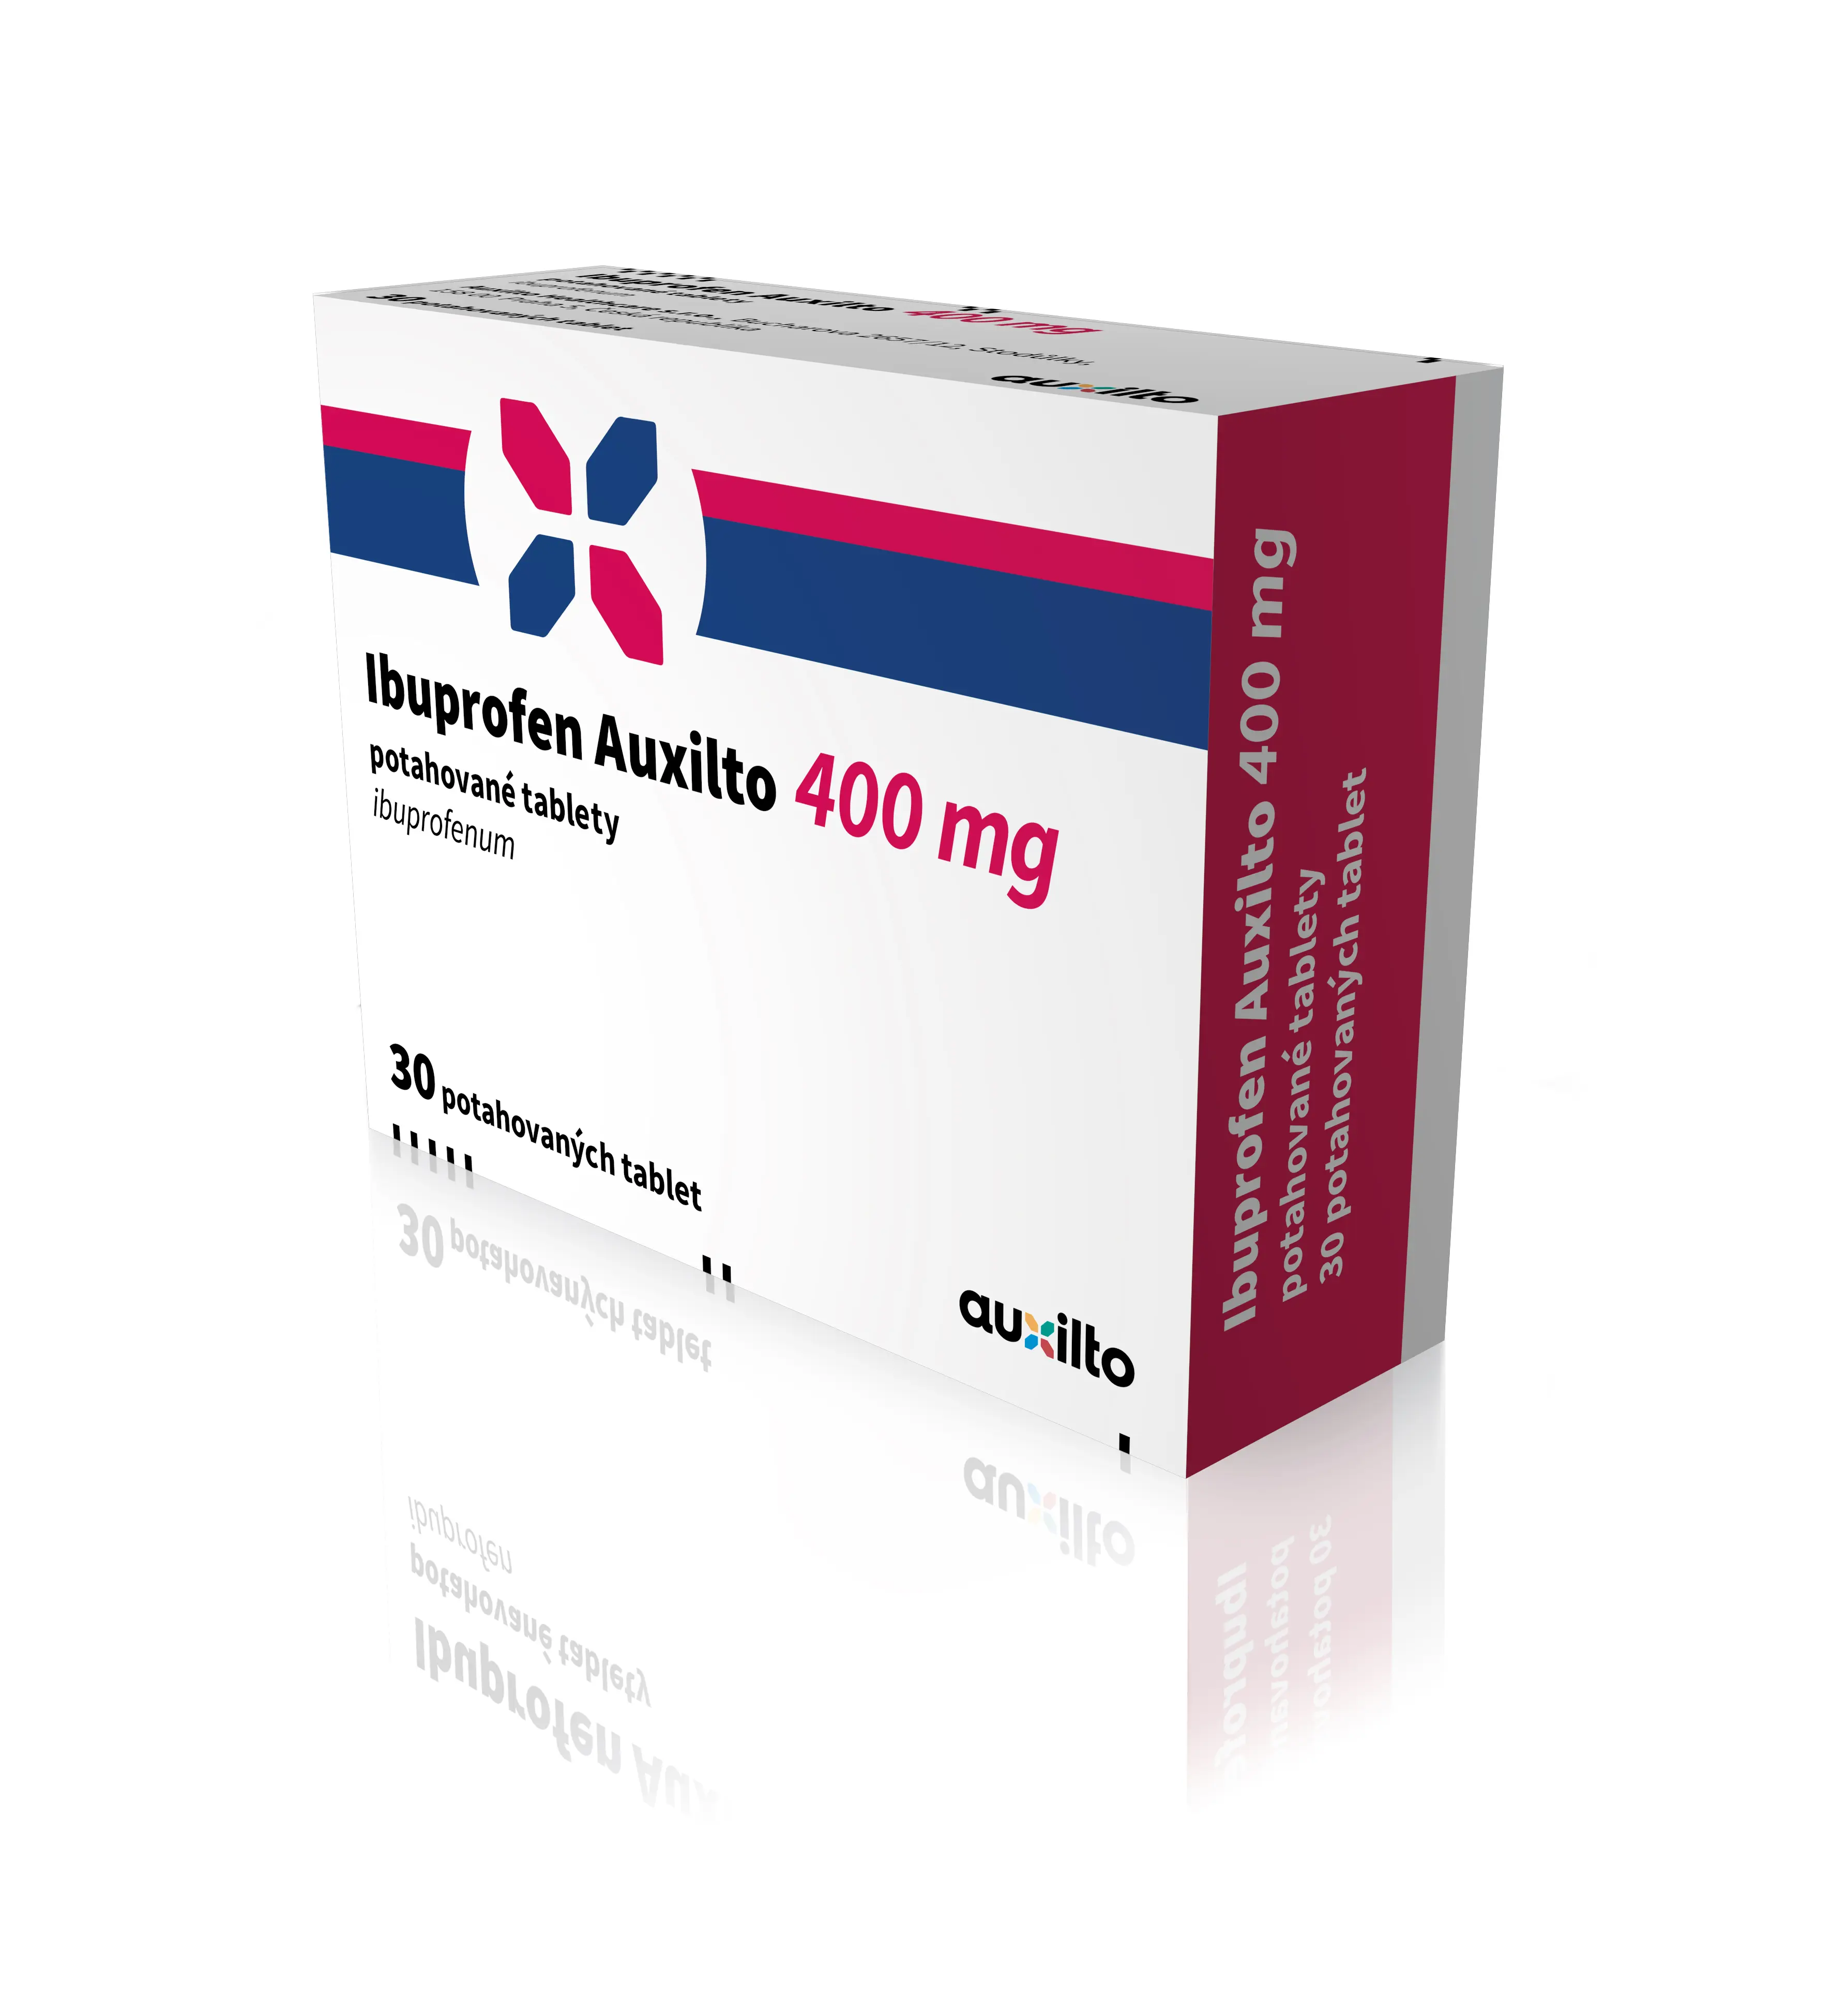 Ibuprofen Auxilto 400 mg tbl.flm. 30